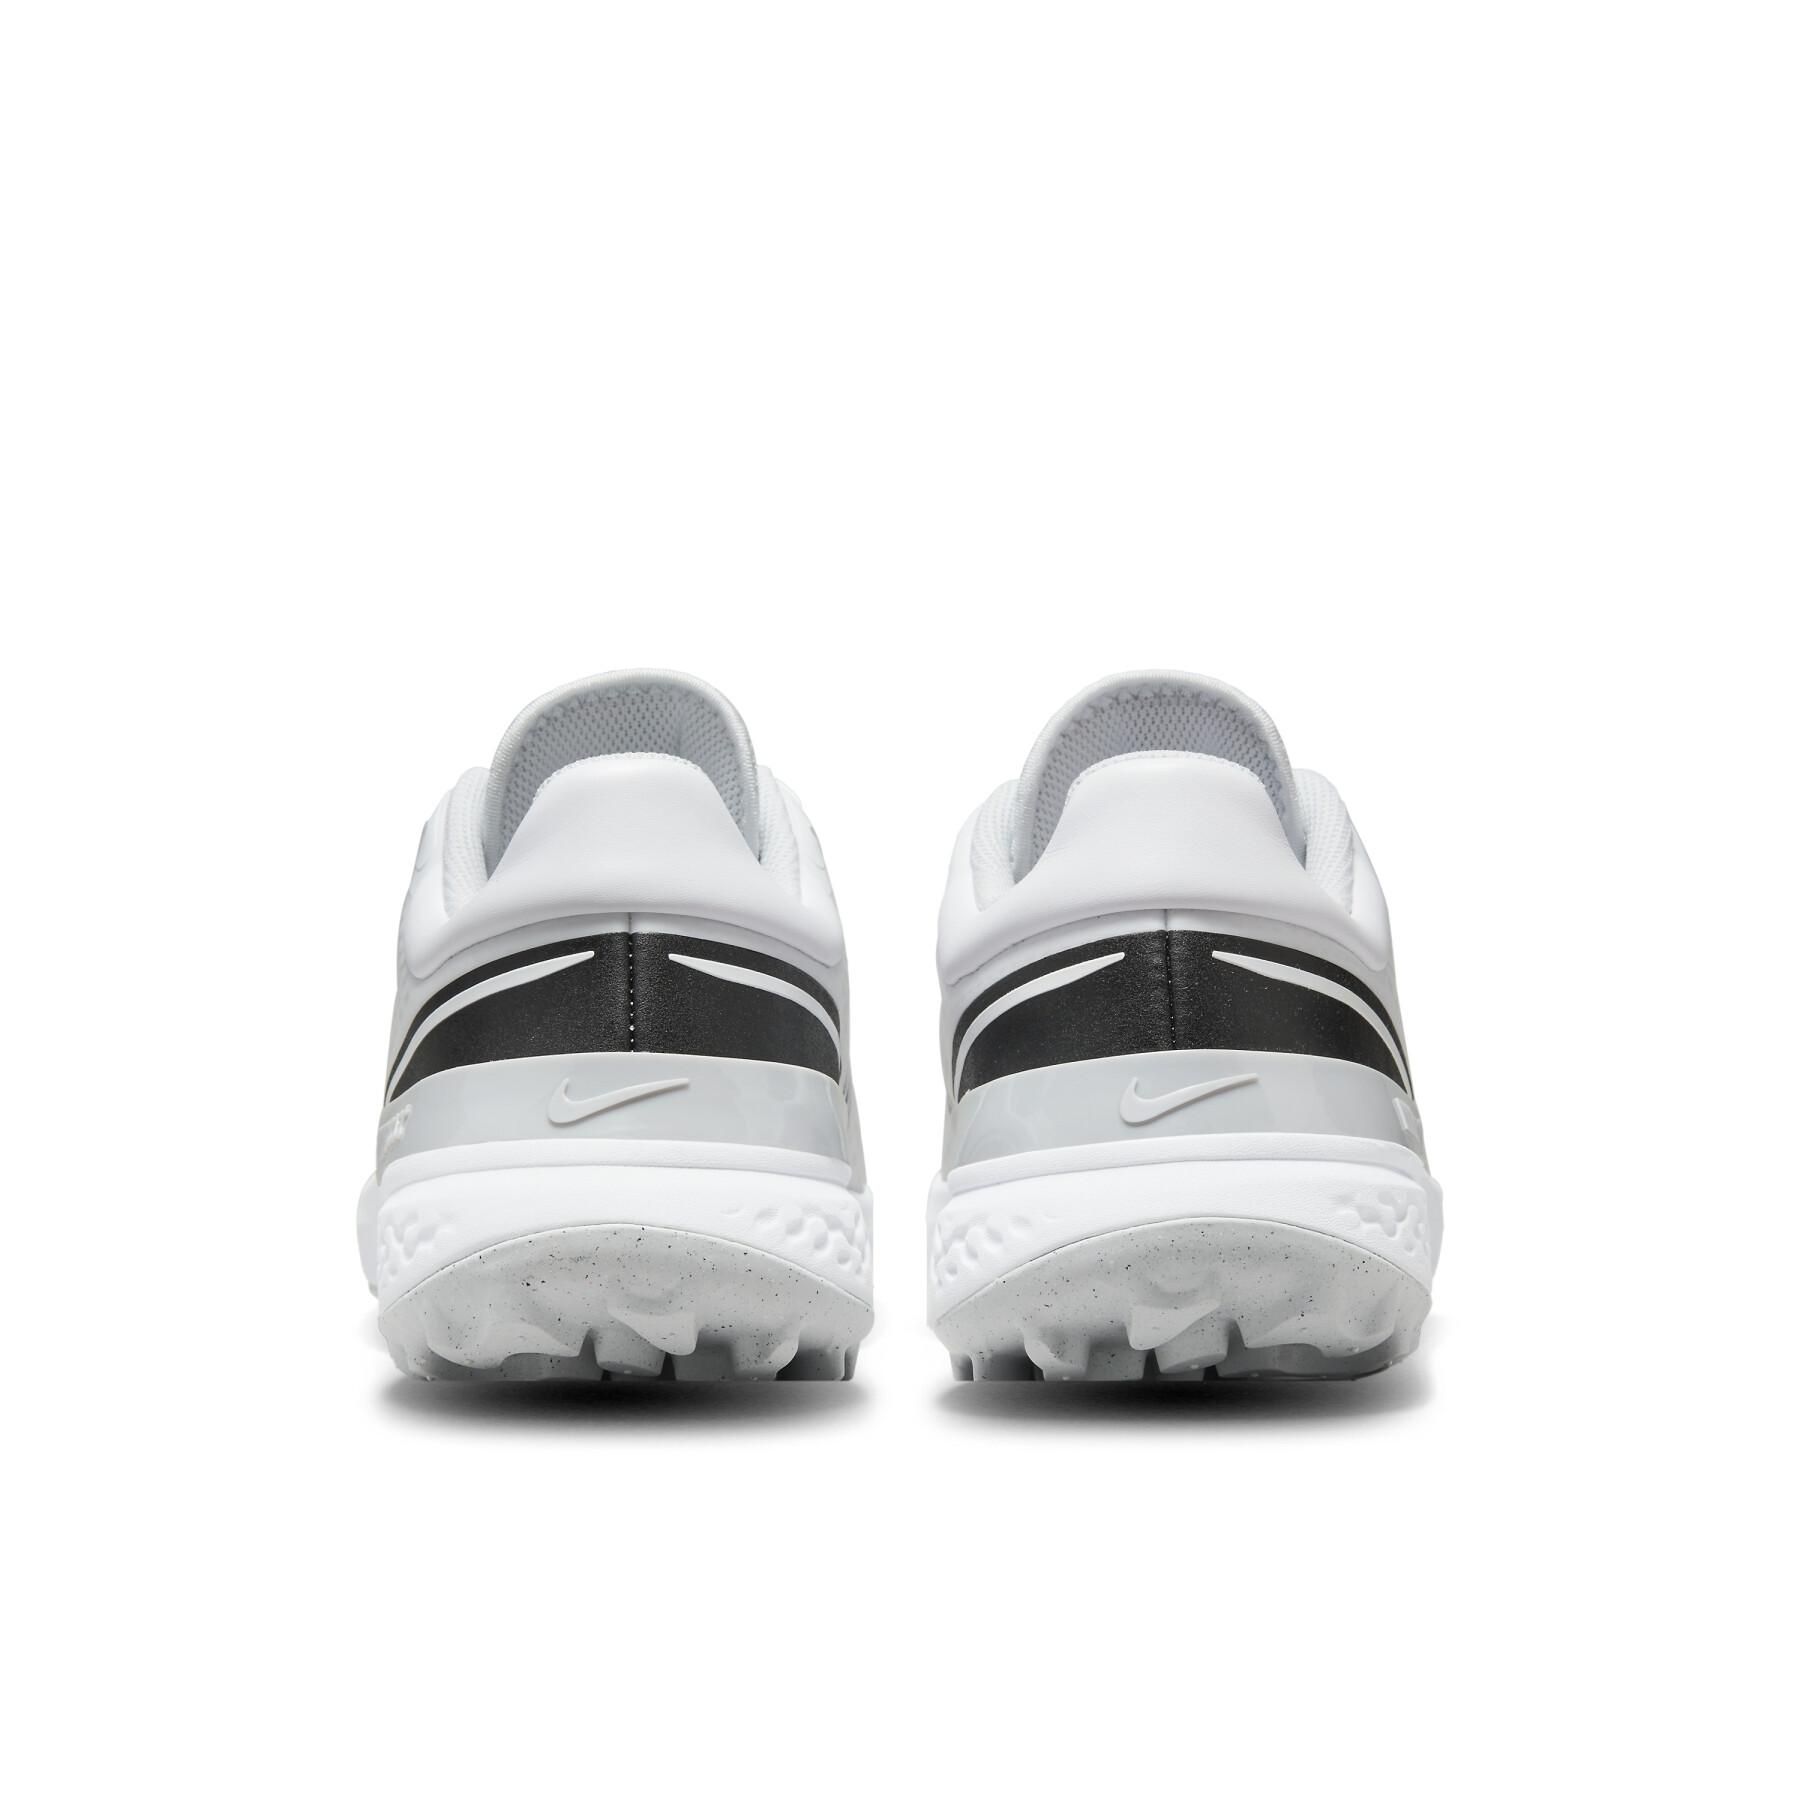 Sapatos de golfe Nike Infinity Pro 2